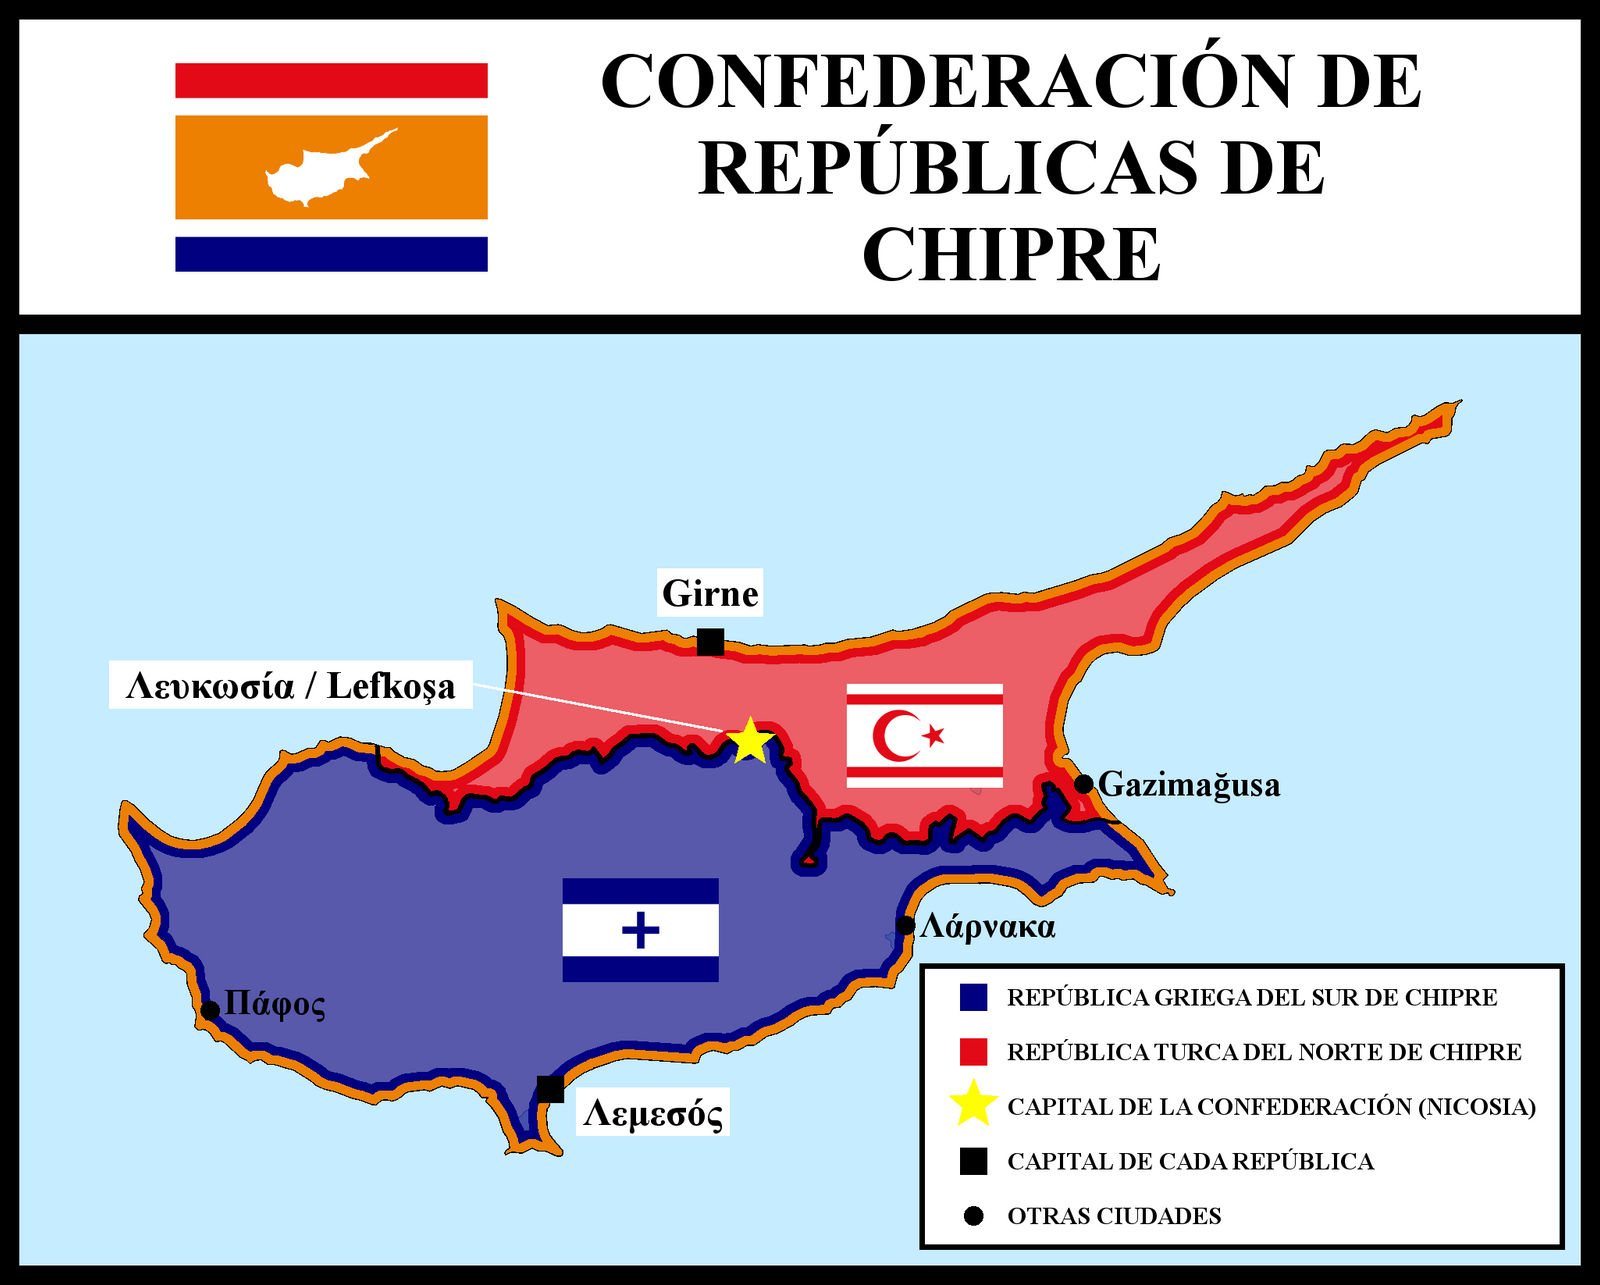 Confederation of Republics of Cyprus